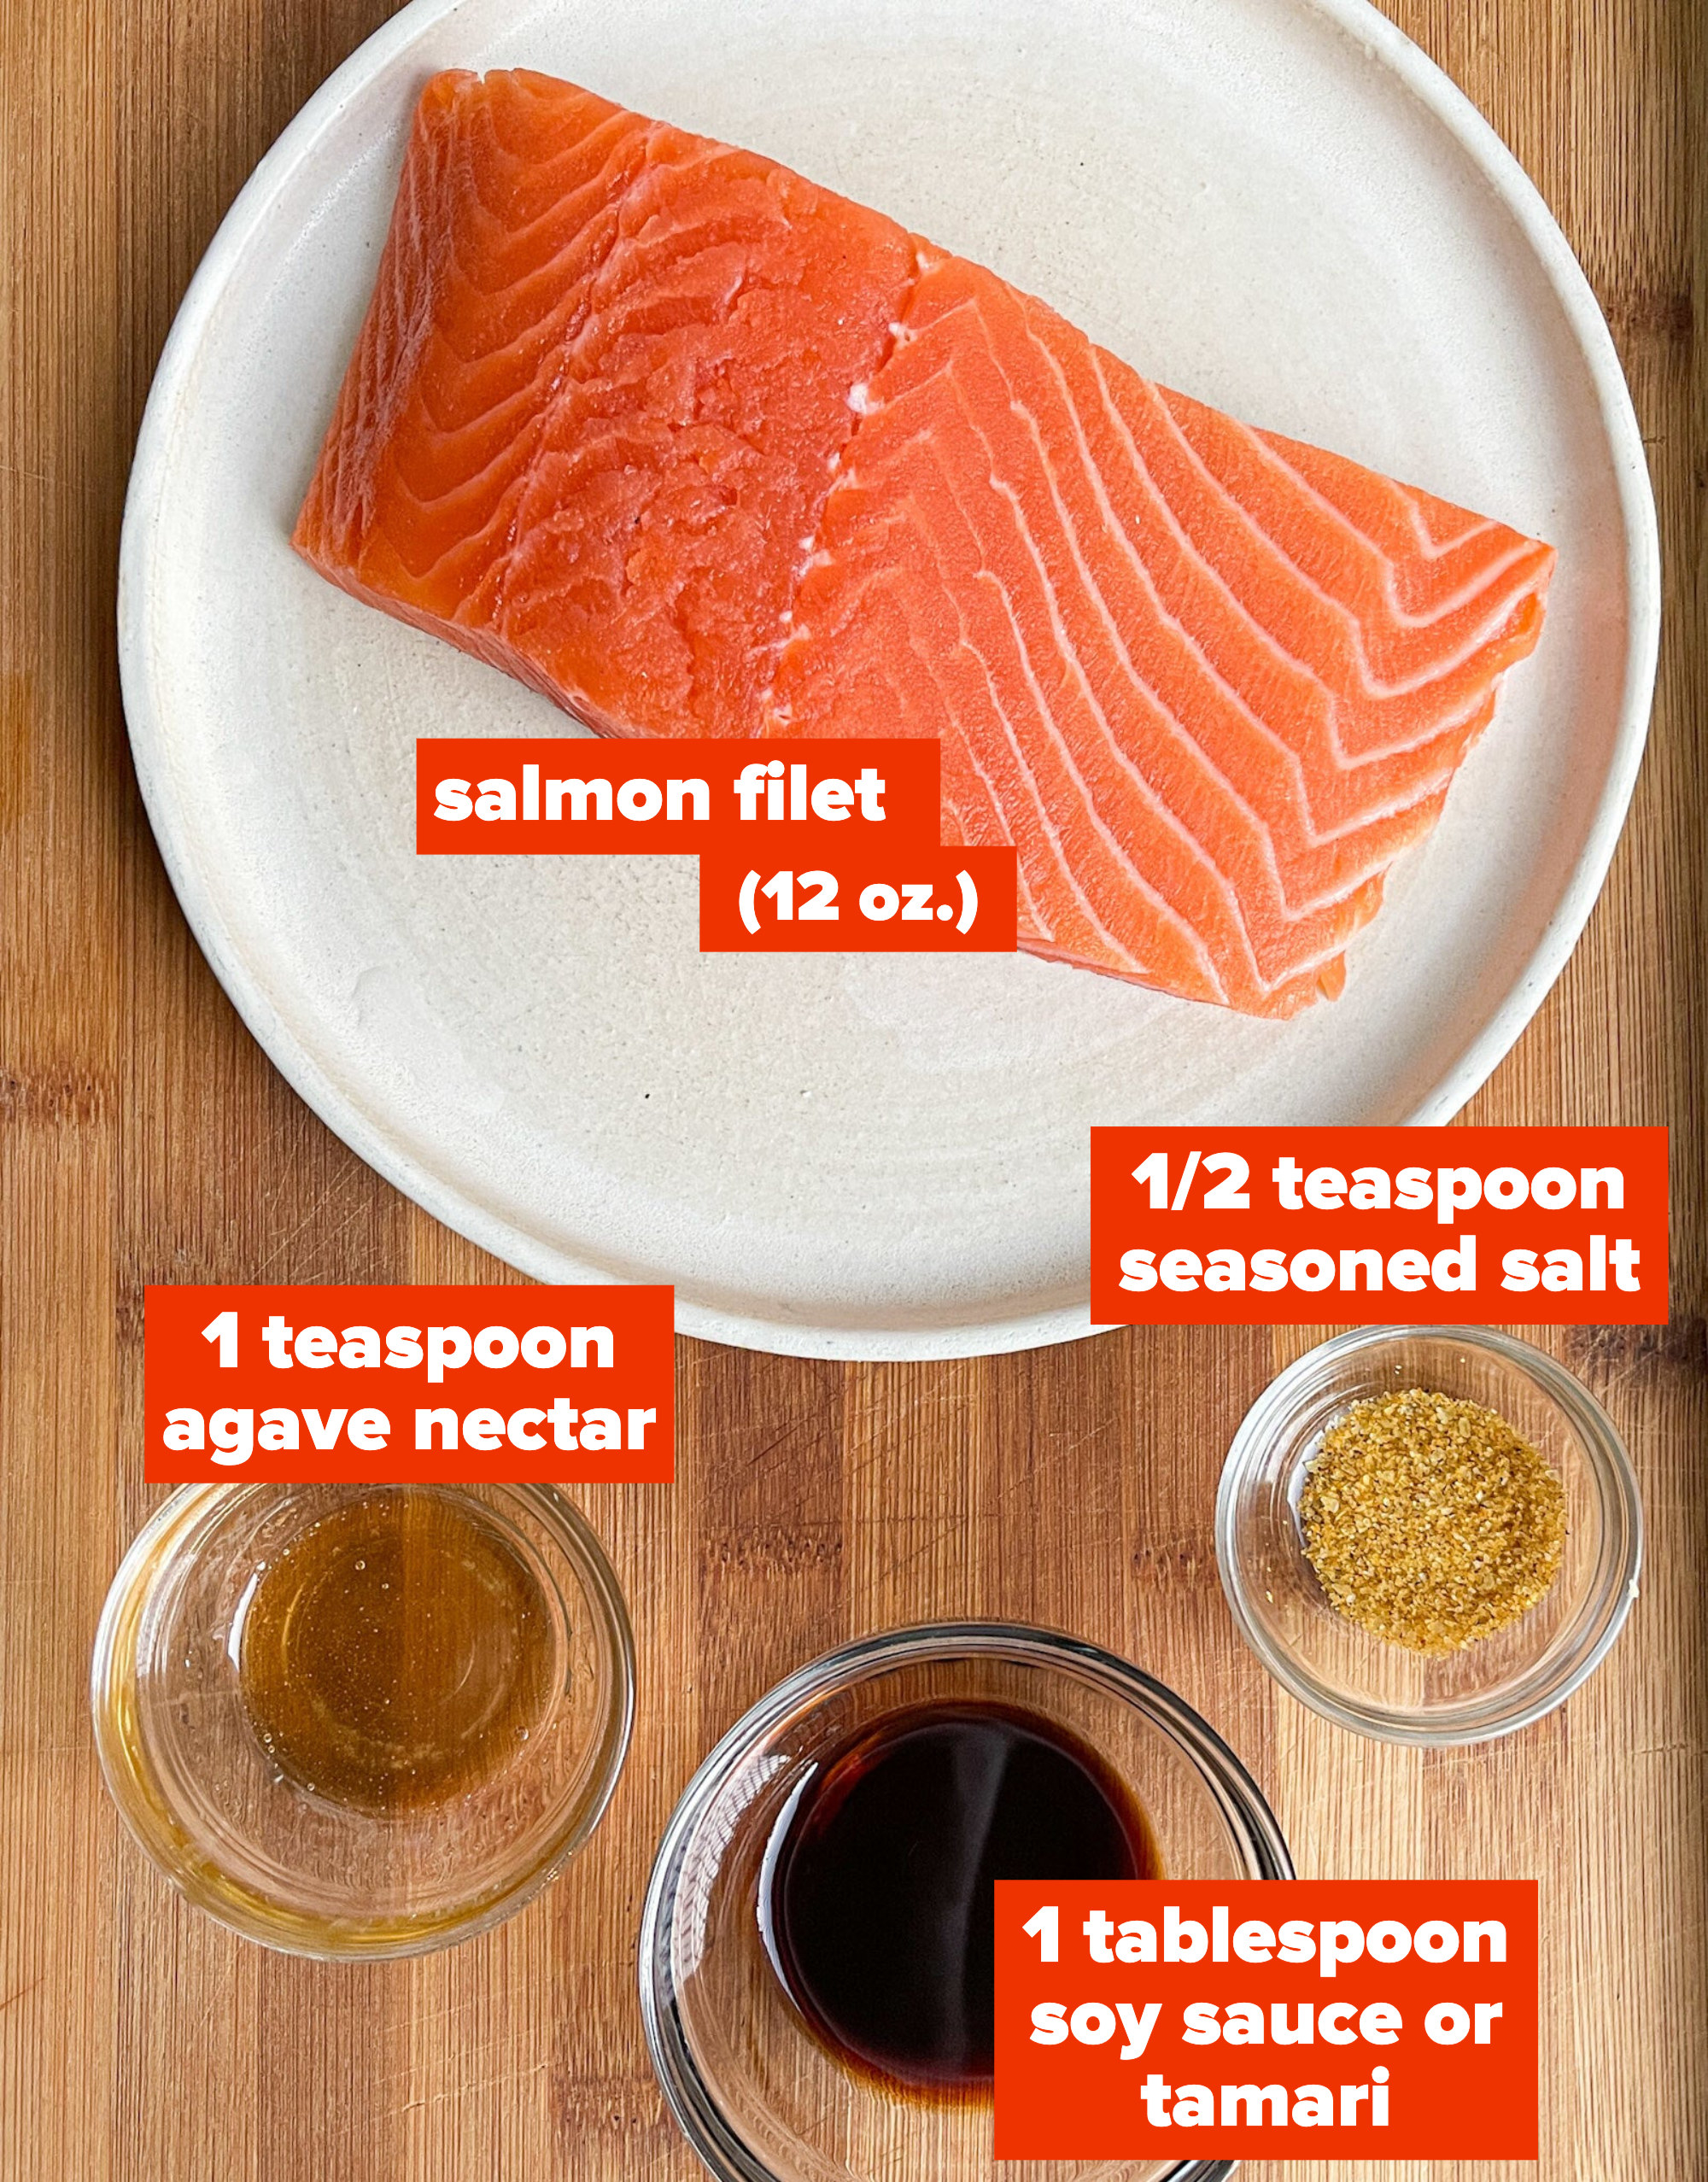 12 oz salmon filet, 1 teaspoon agave nectar, 1 tablespoon soy sauce, 1/2 teaspoon seasoned salt